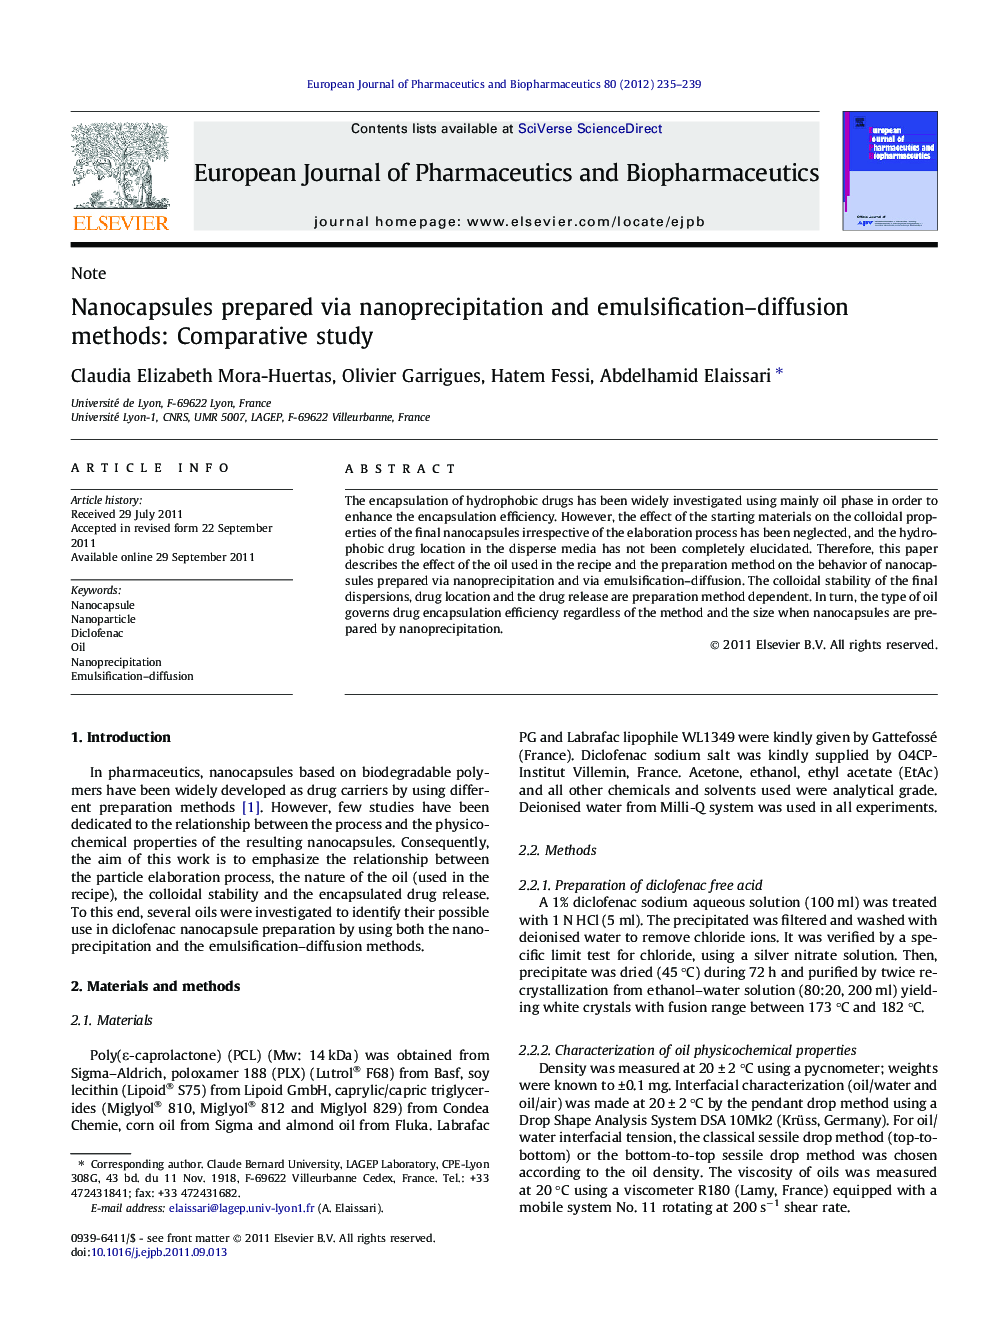 Nanocapsules prepared via nanoprecipitation and emulsification–diffusion methods: Comparative study